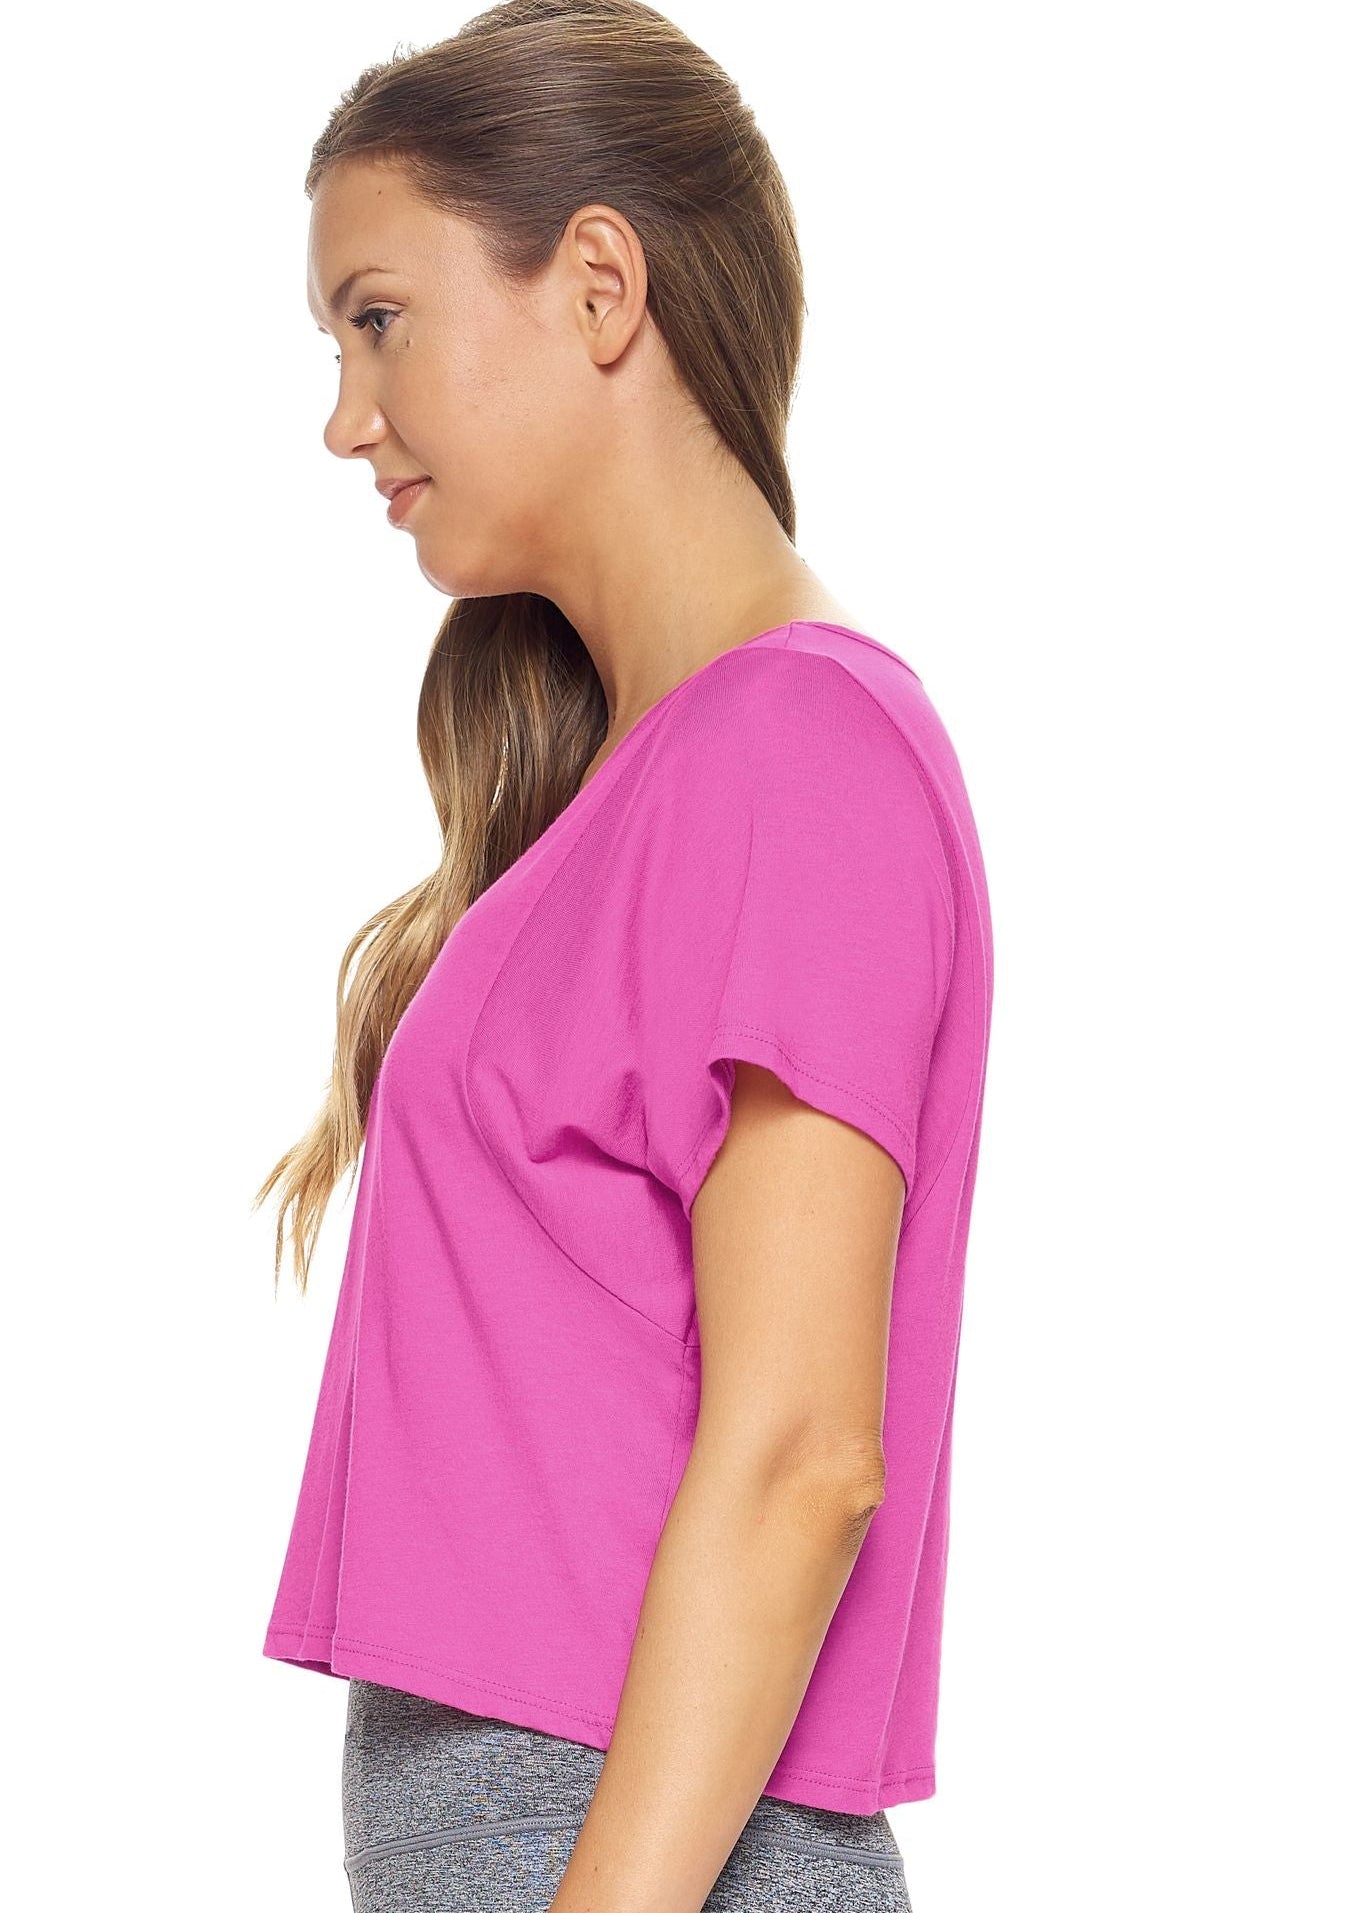 Expert Brand MoCA Plant Based Cropped T-Shirt - Plus - DressbarnActivewear